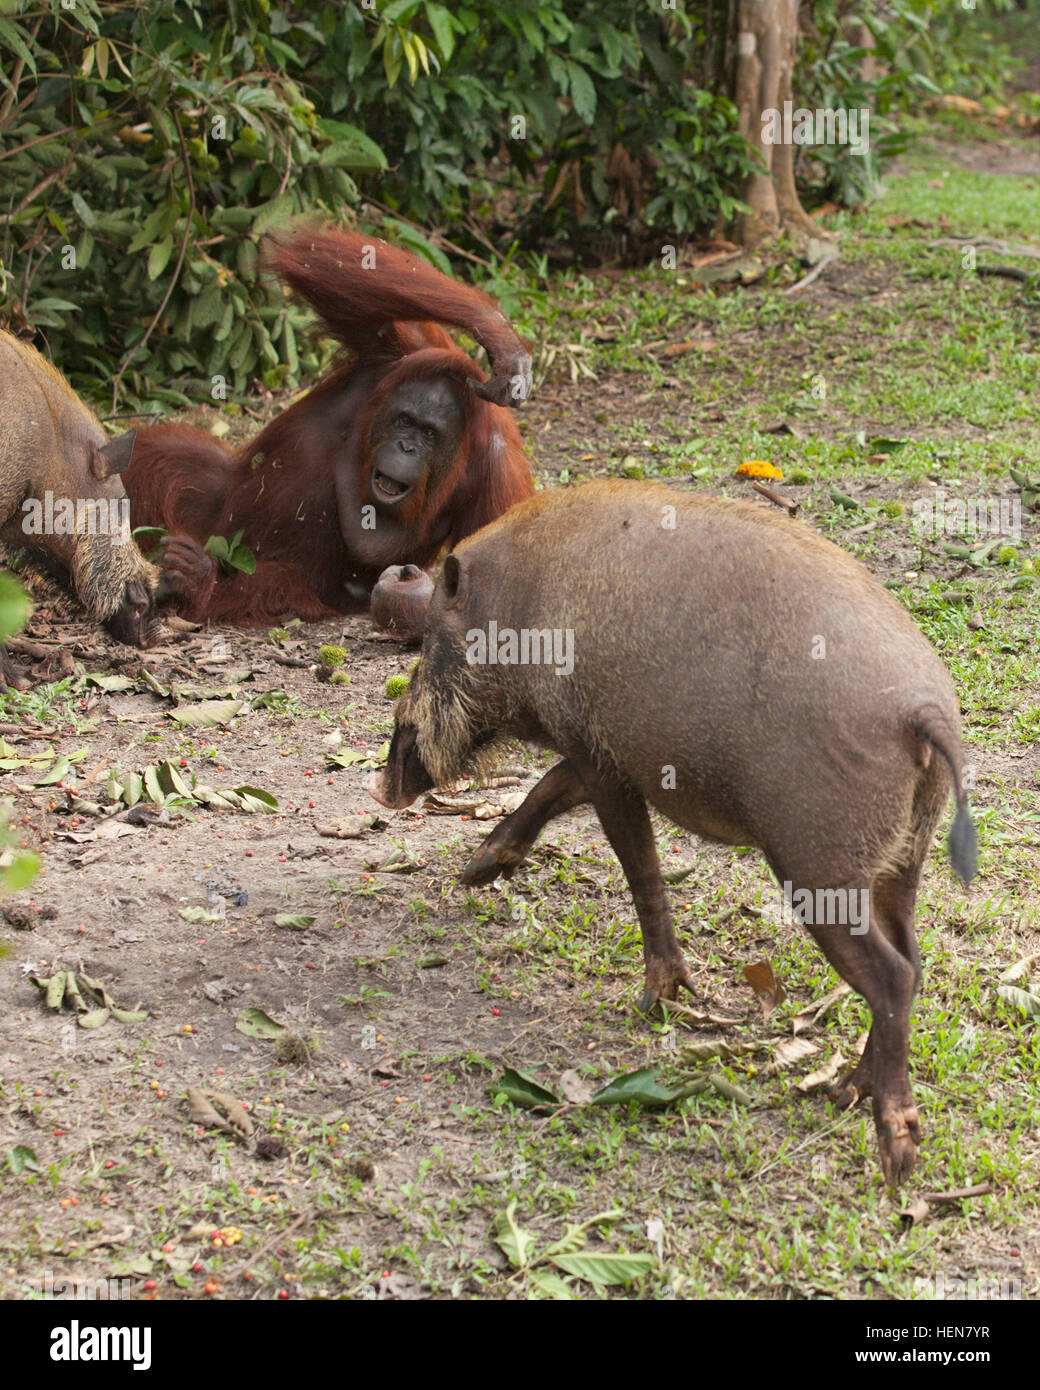 Wild orangutan (Pongo pygmaeus) regarder les cochons barbus de Bornéo (Sus barbatus) au bord de la forêt, le Camp Leakey. Banque D'Images